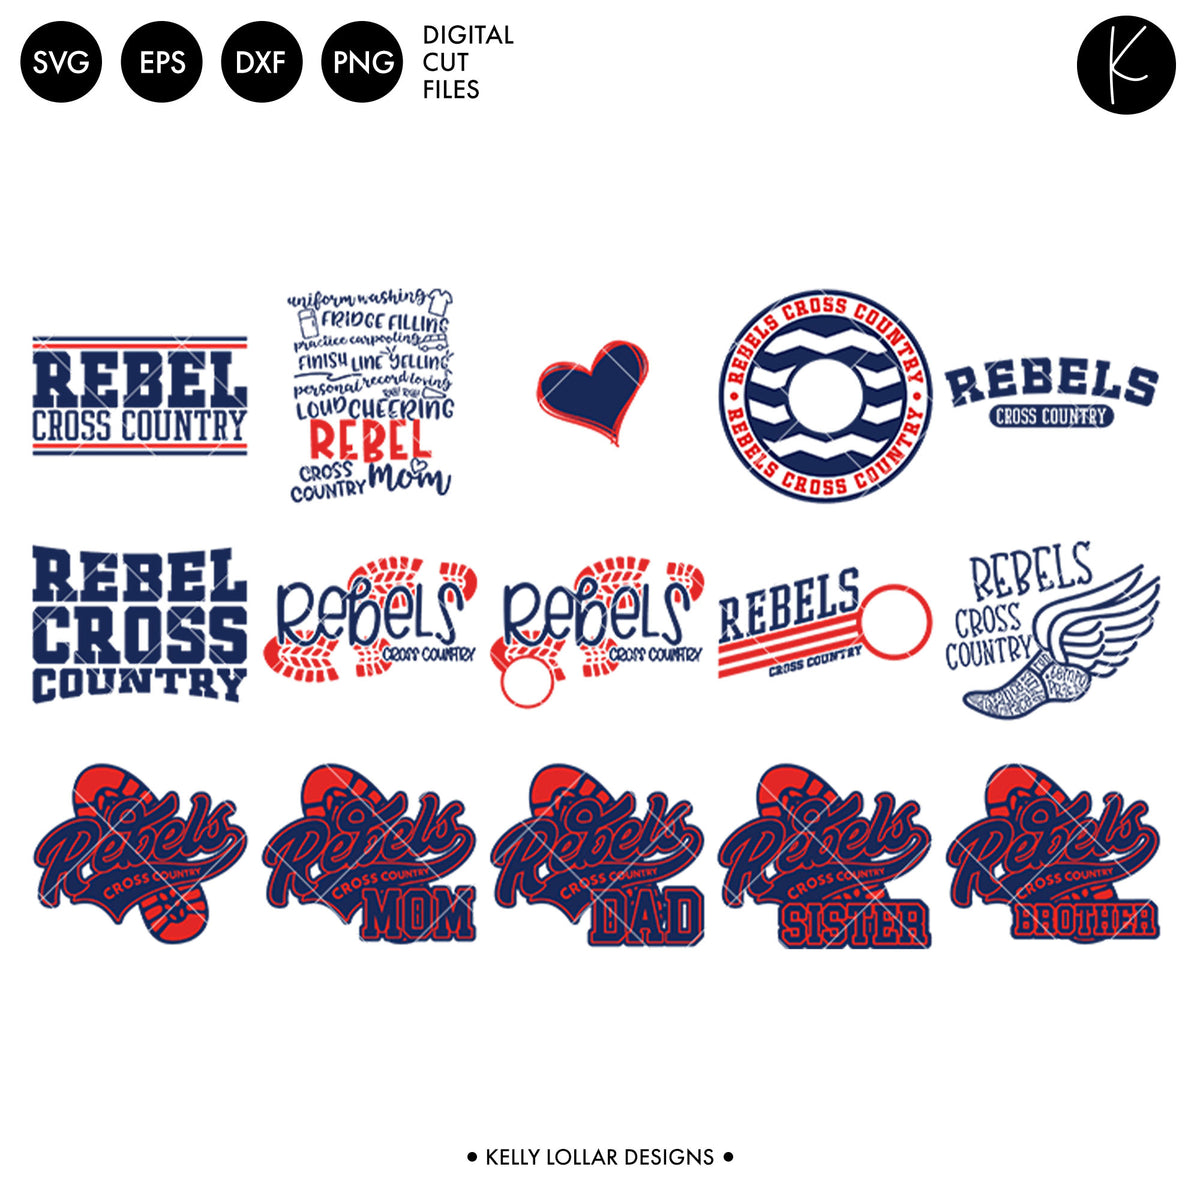 Rebels Everything Spirit Bundle | SVG DXF EPS PNG Cut Files